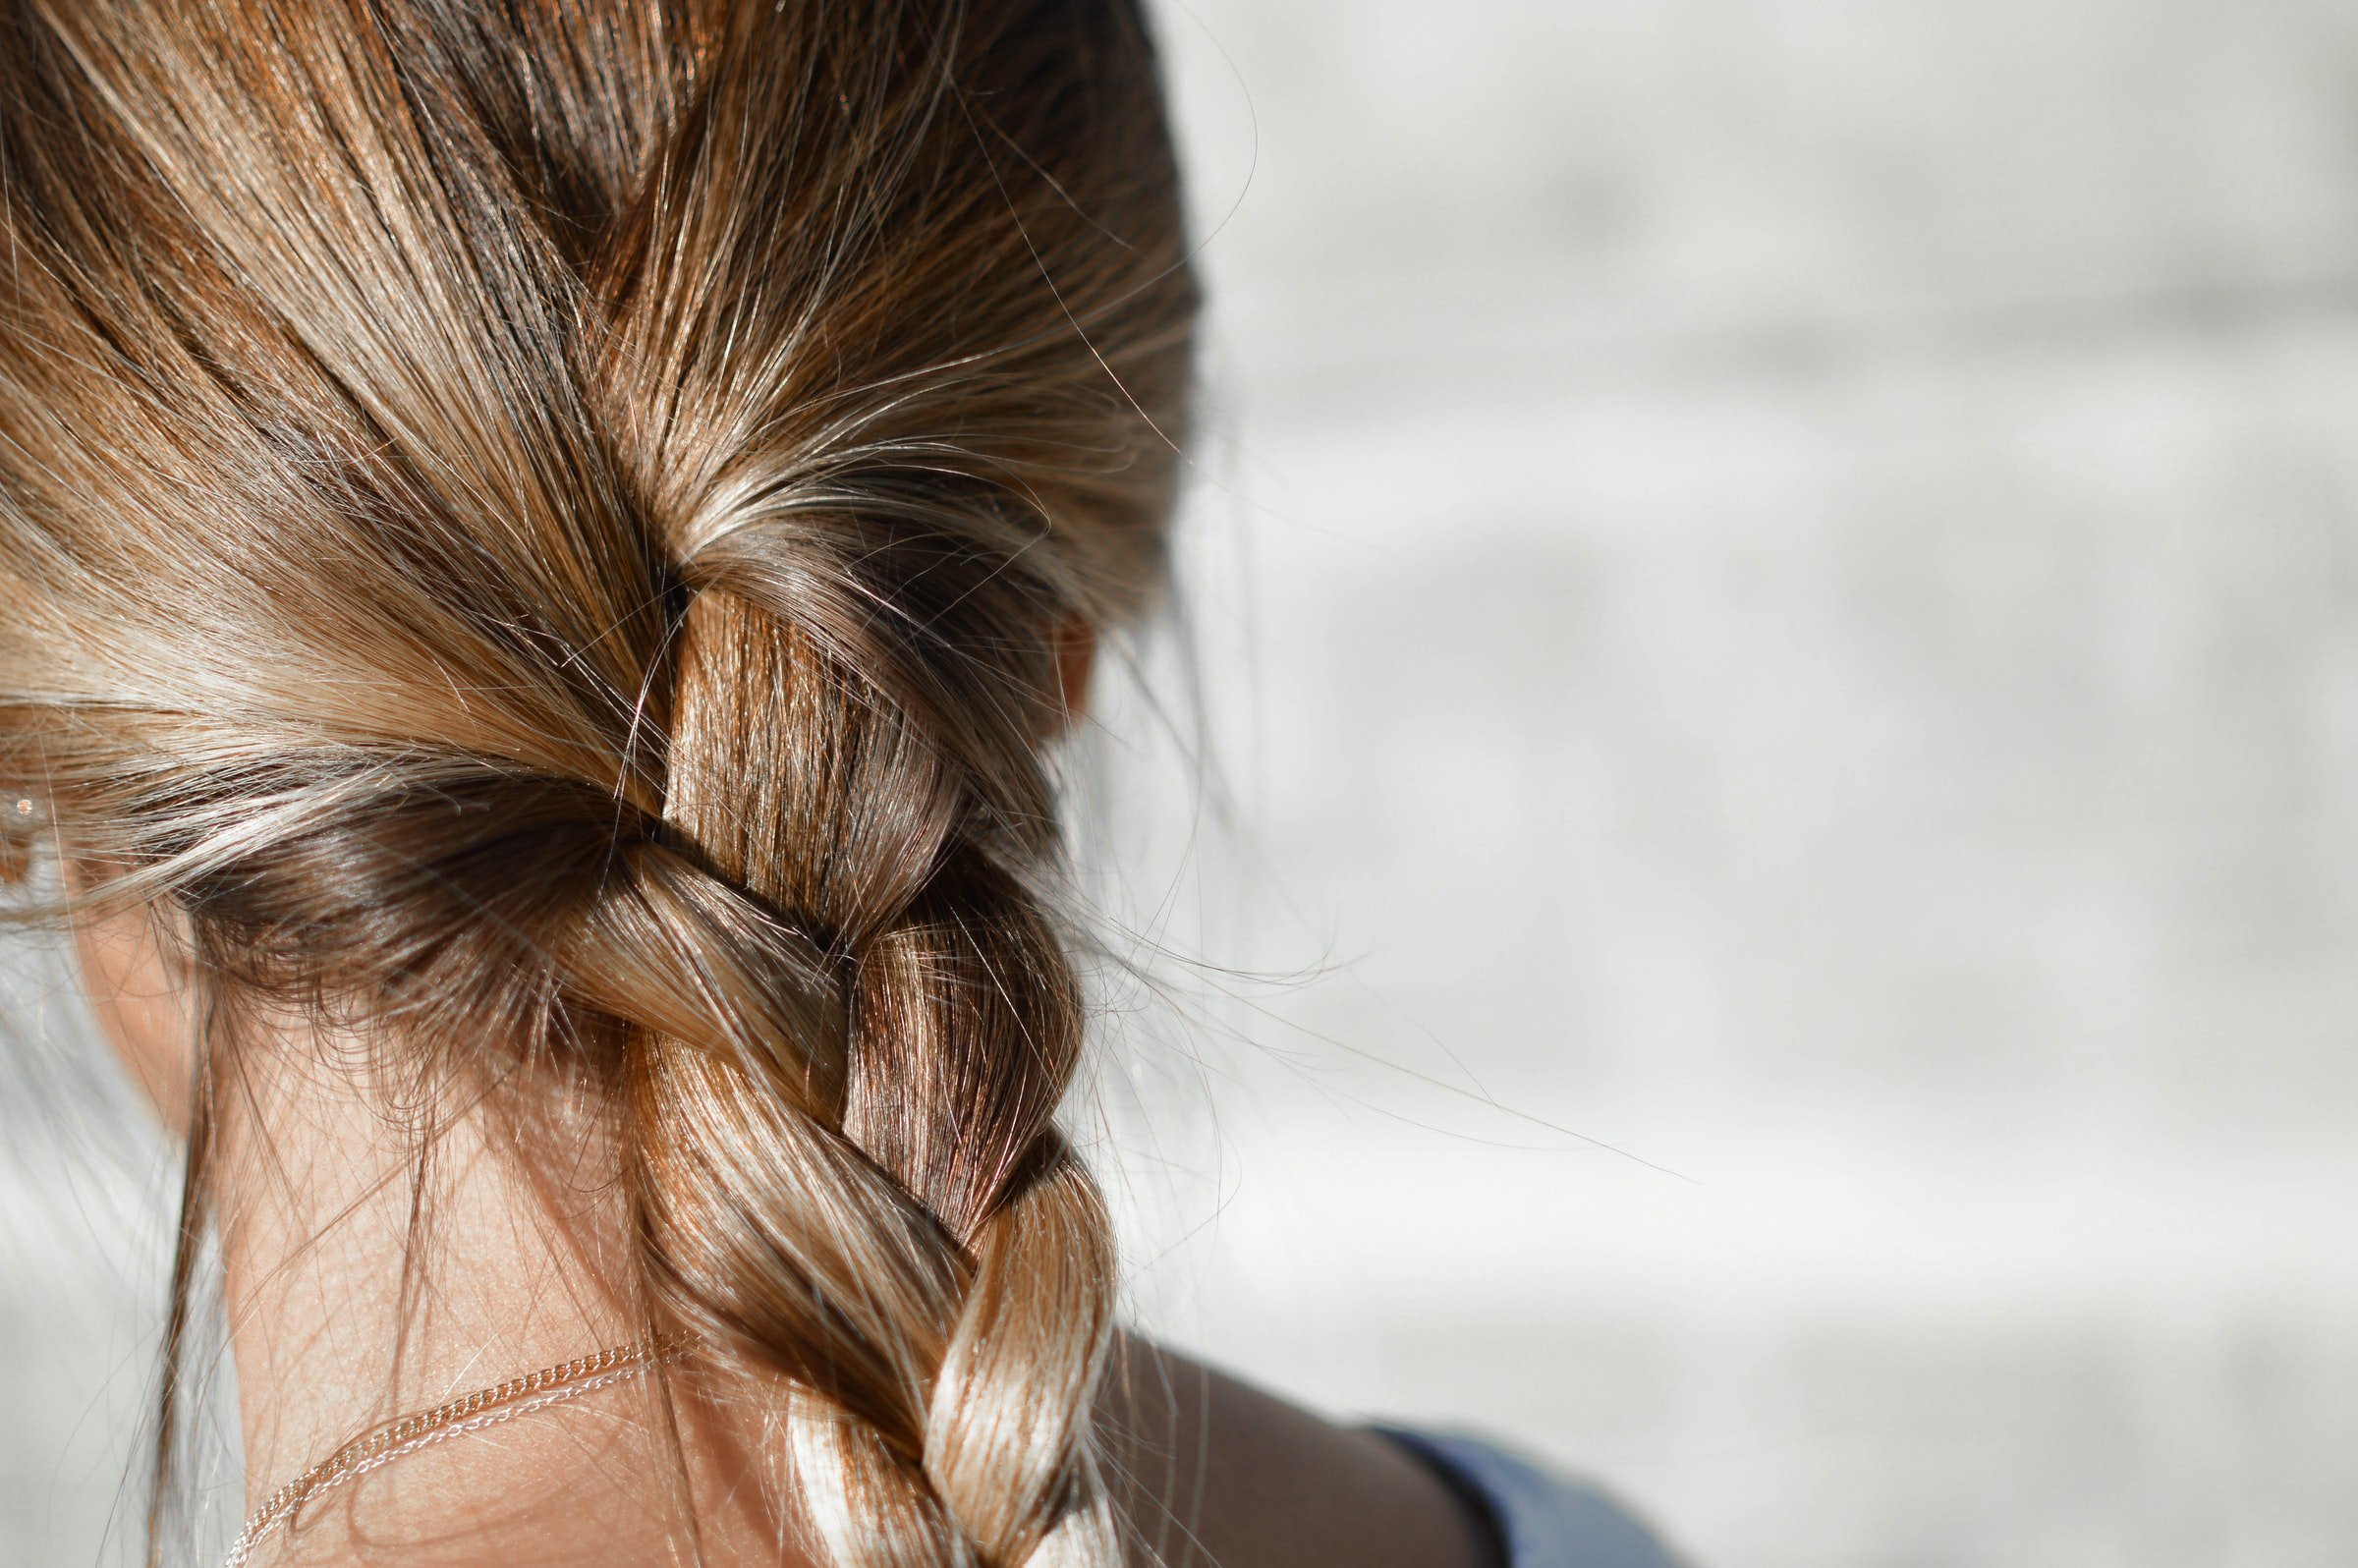 Close-up of braided hair. | Source: Unsplash